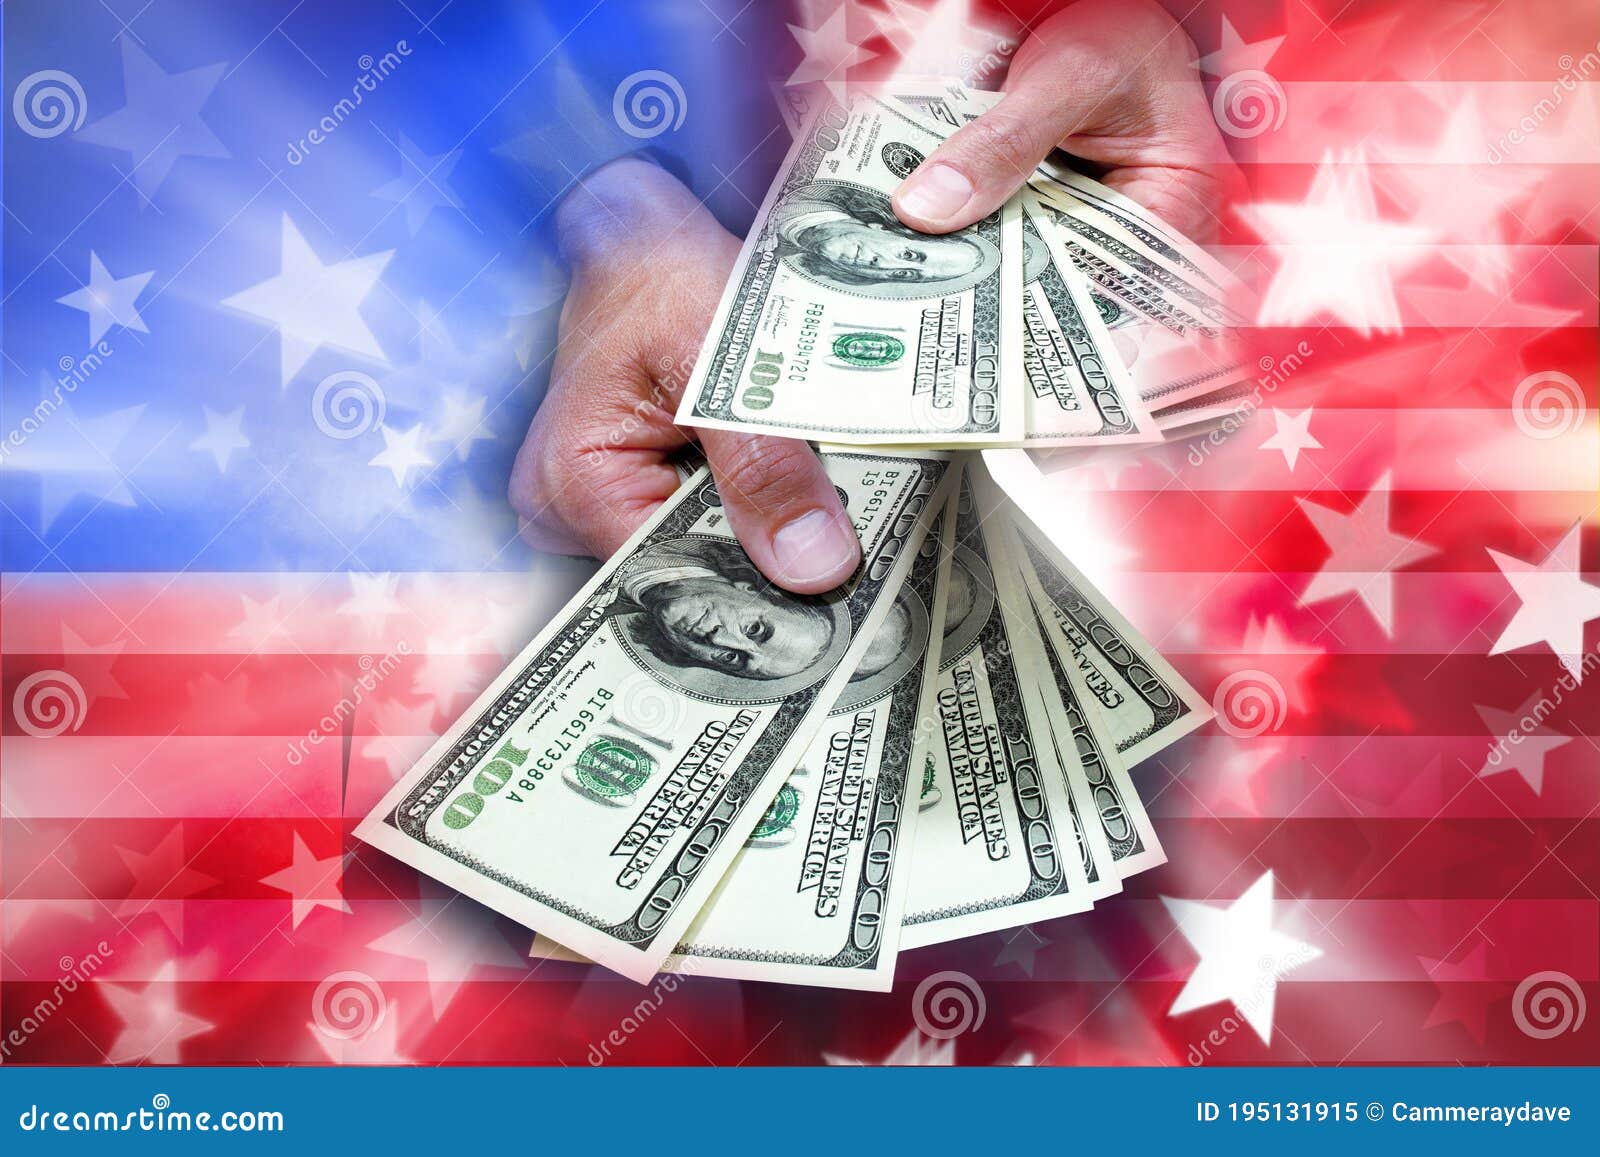 political money american flag donation